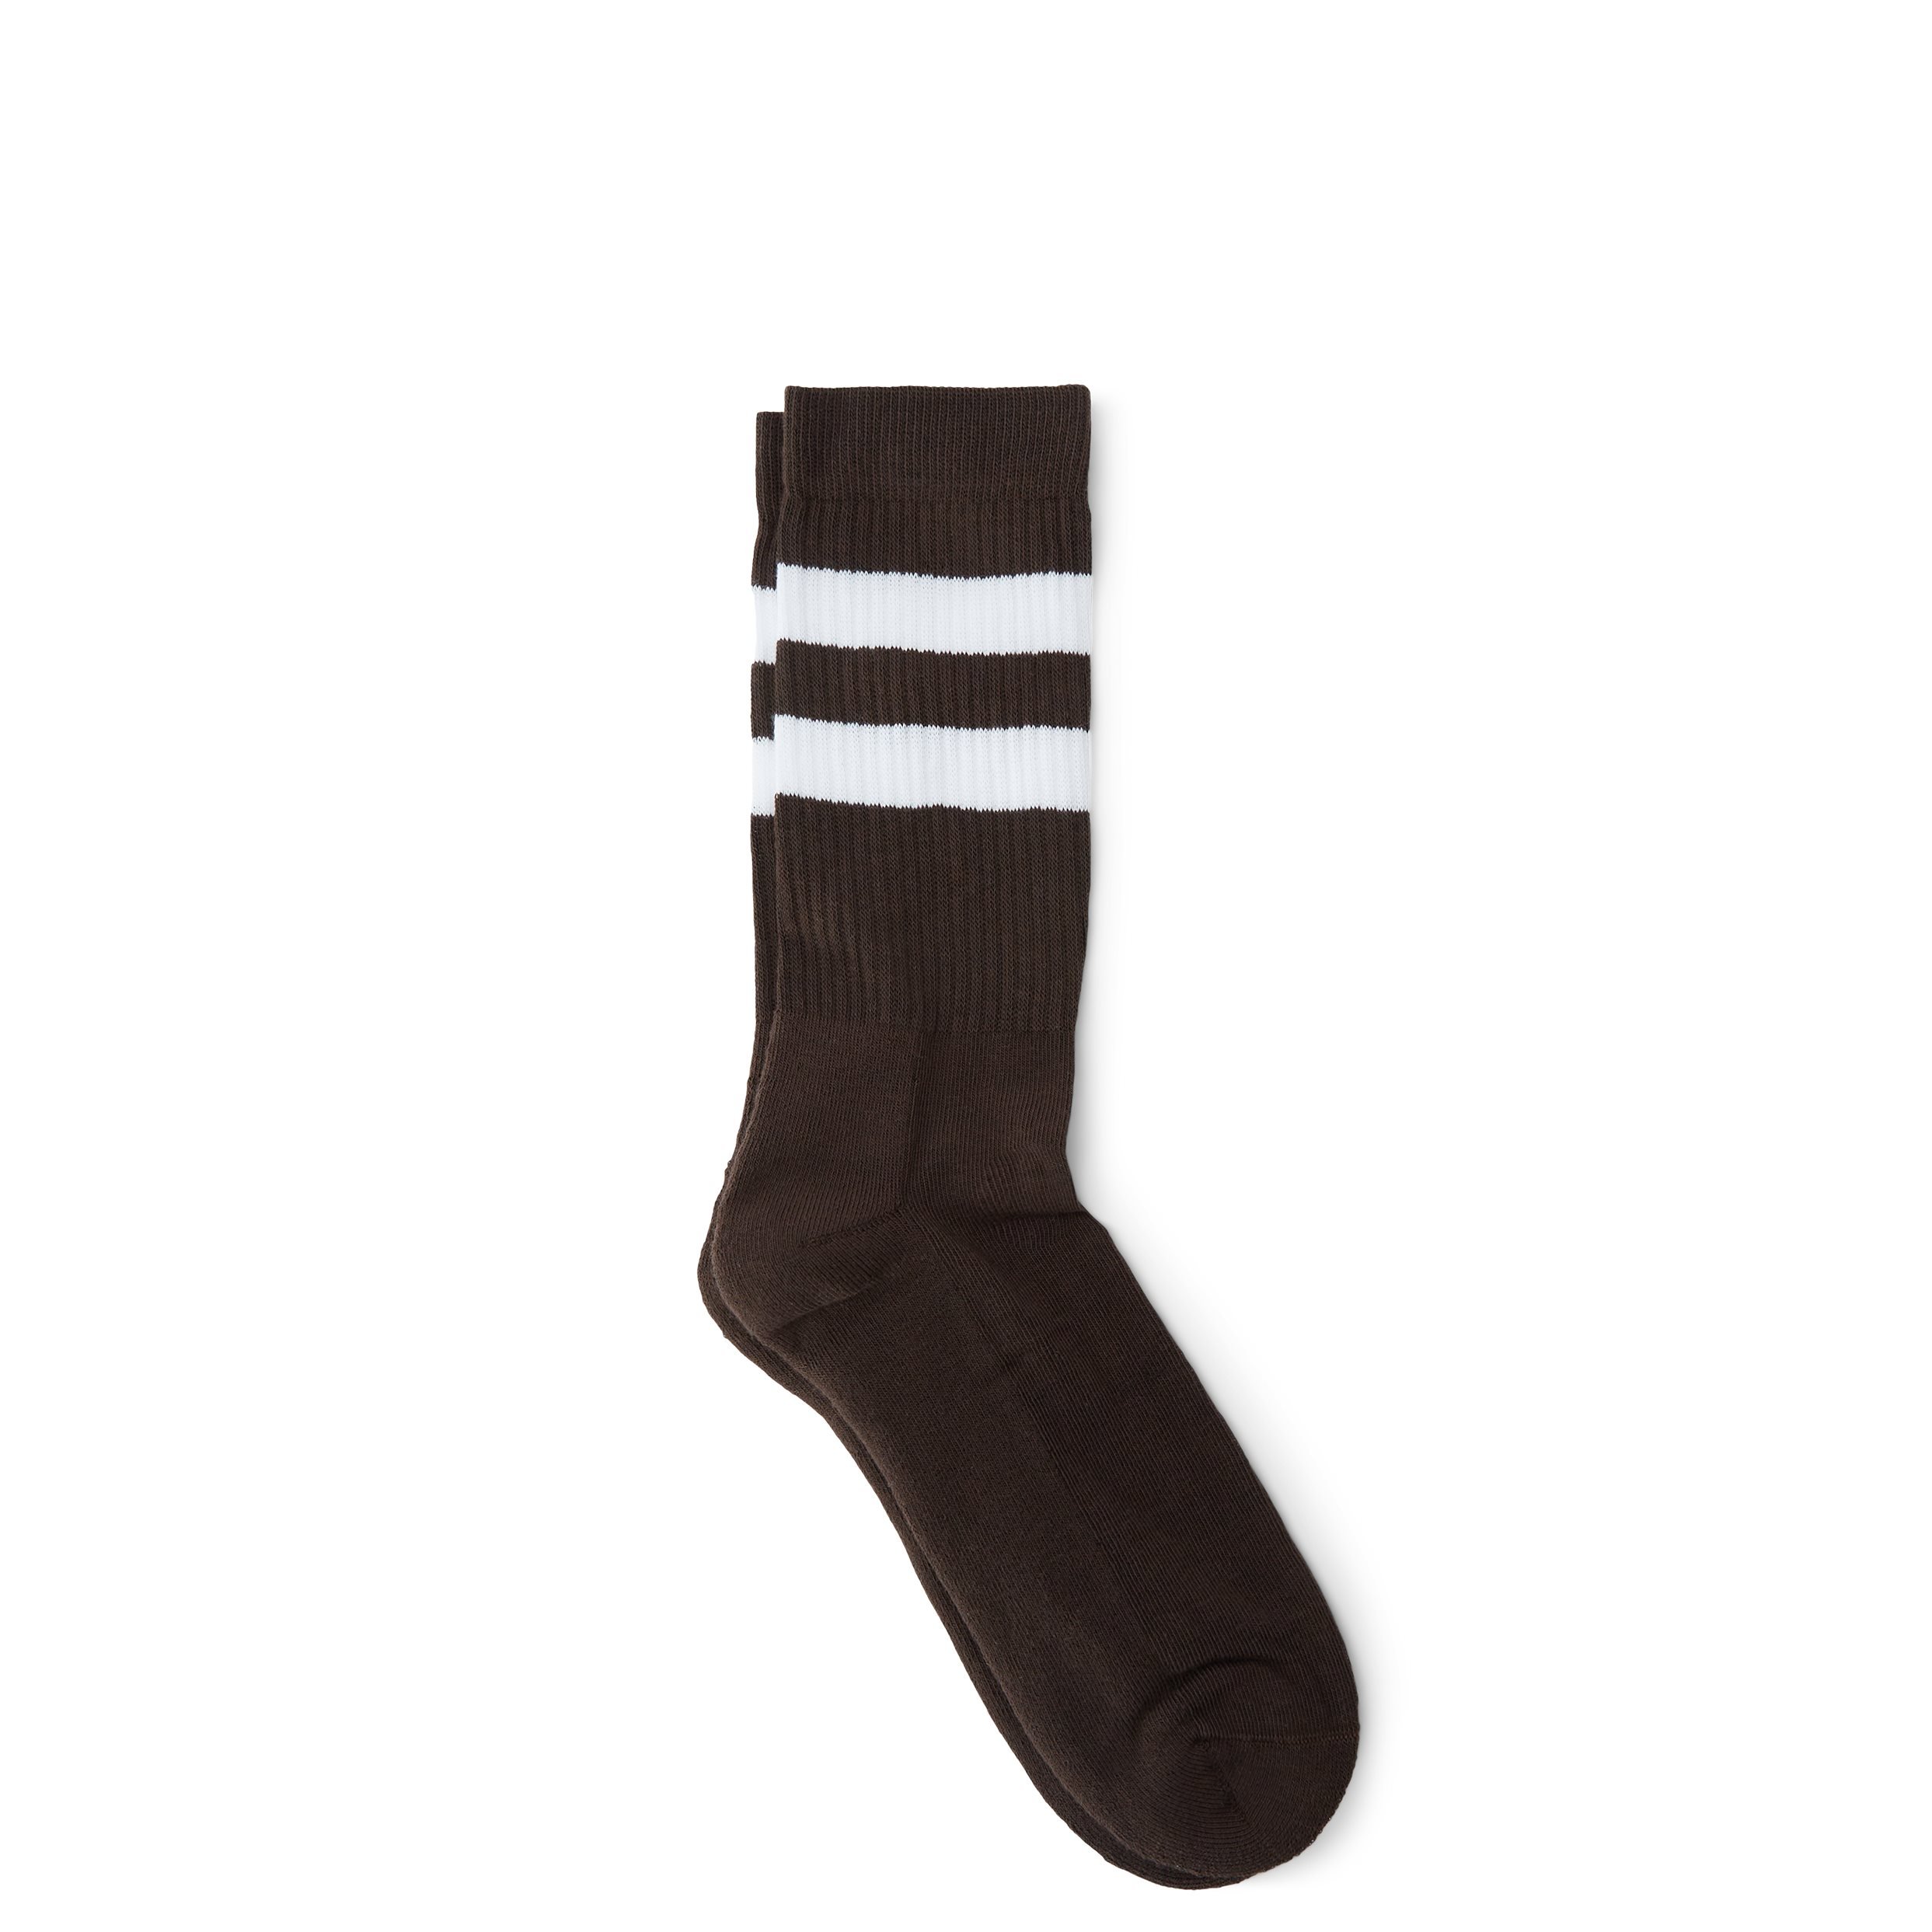 qUINT Socks TENNIS 115-12527 Brown